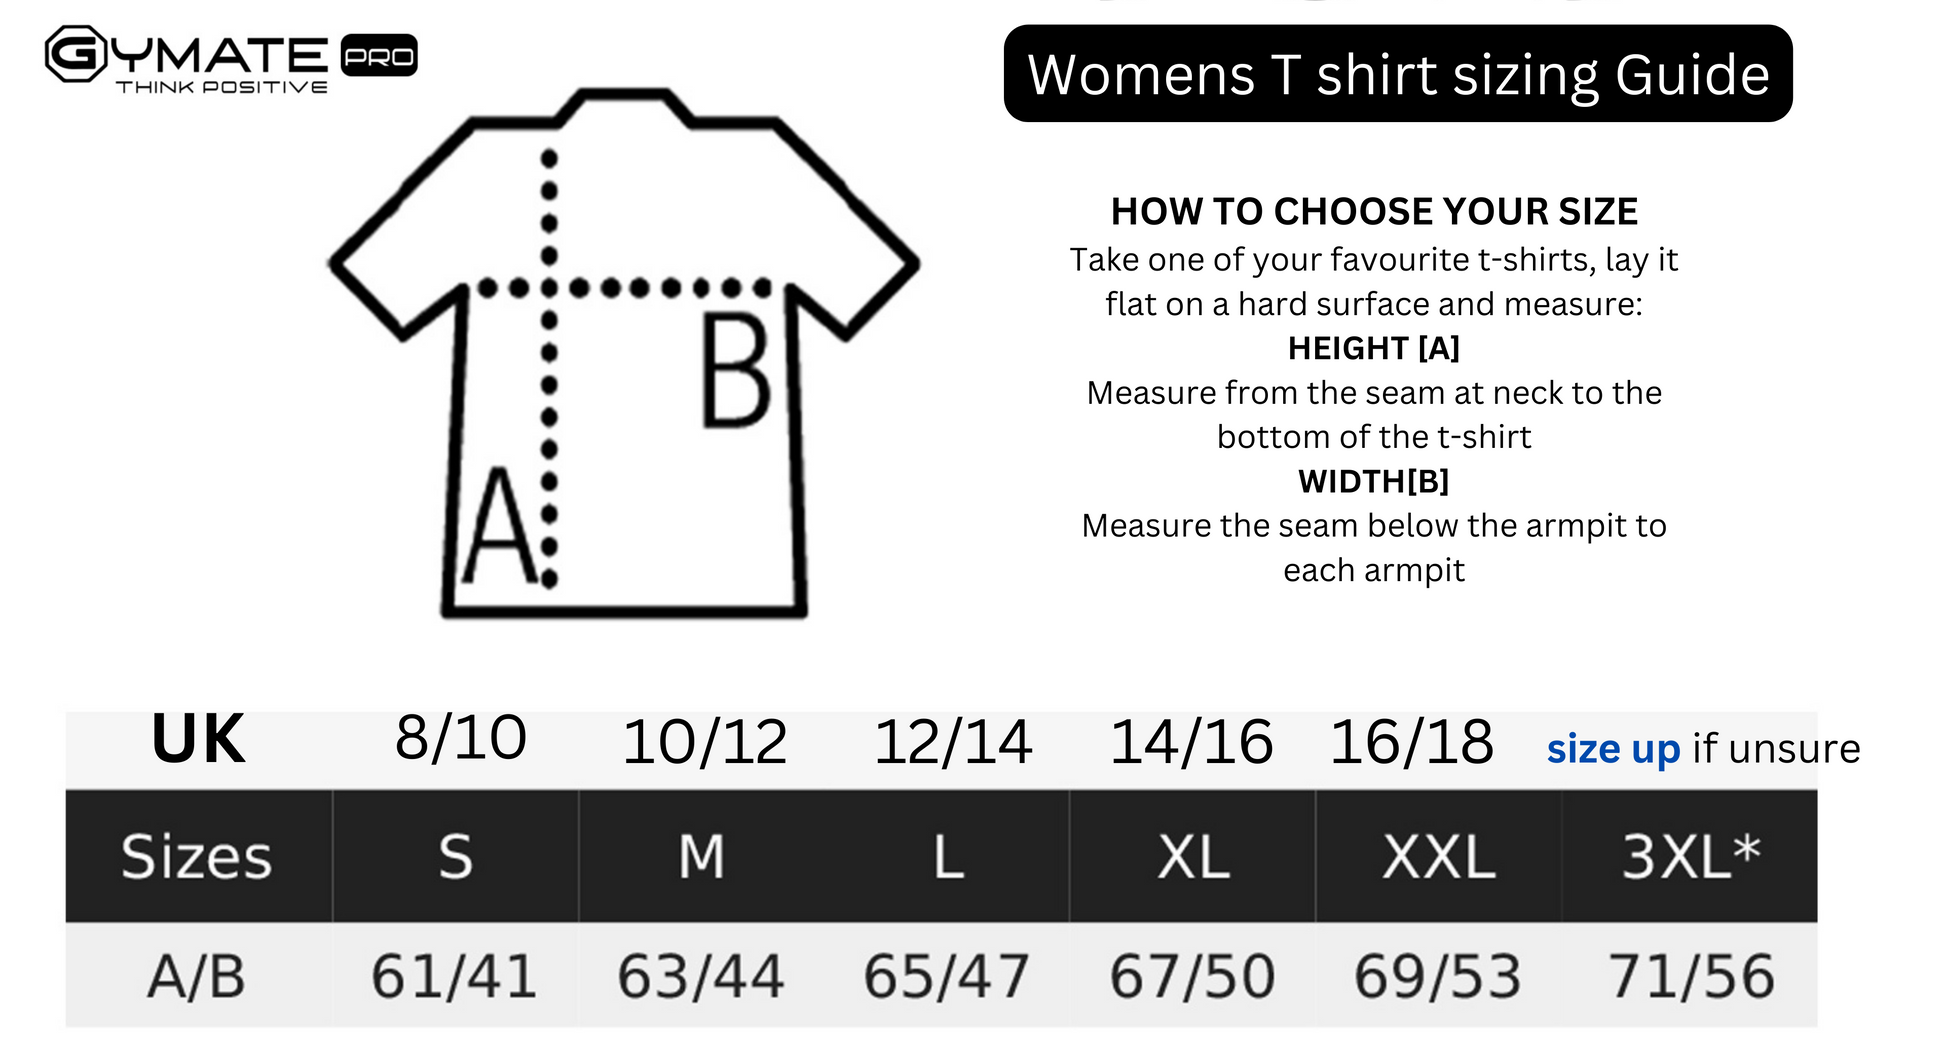 Designer T shirts for women Original Gymate chest size chart